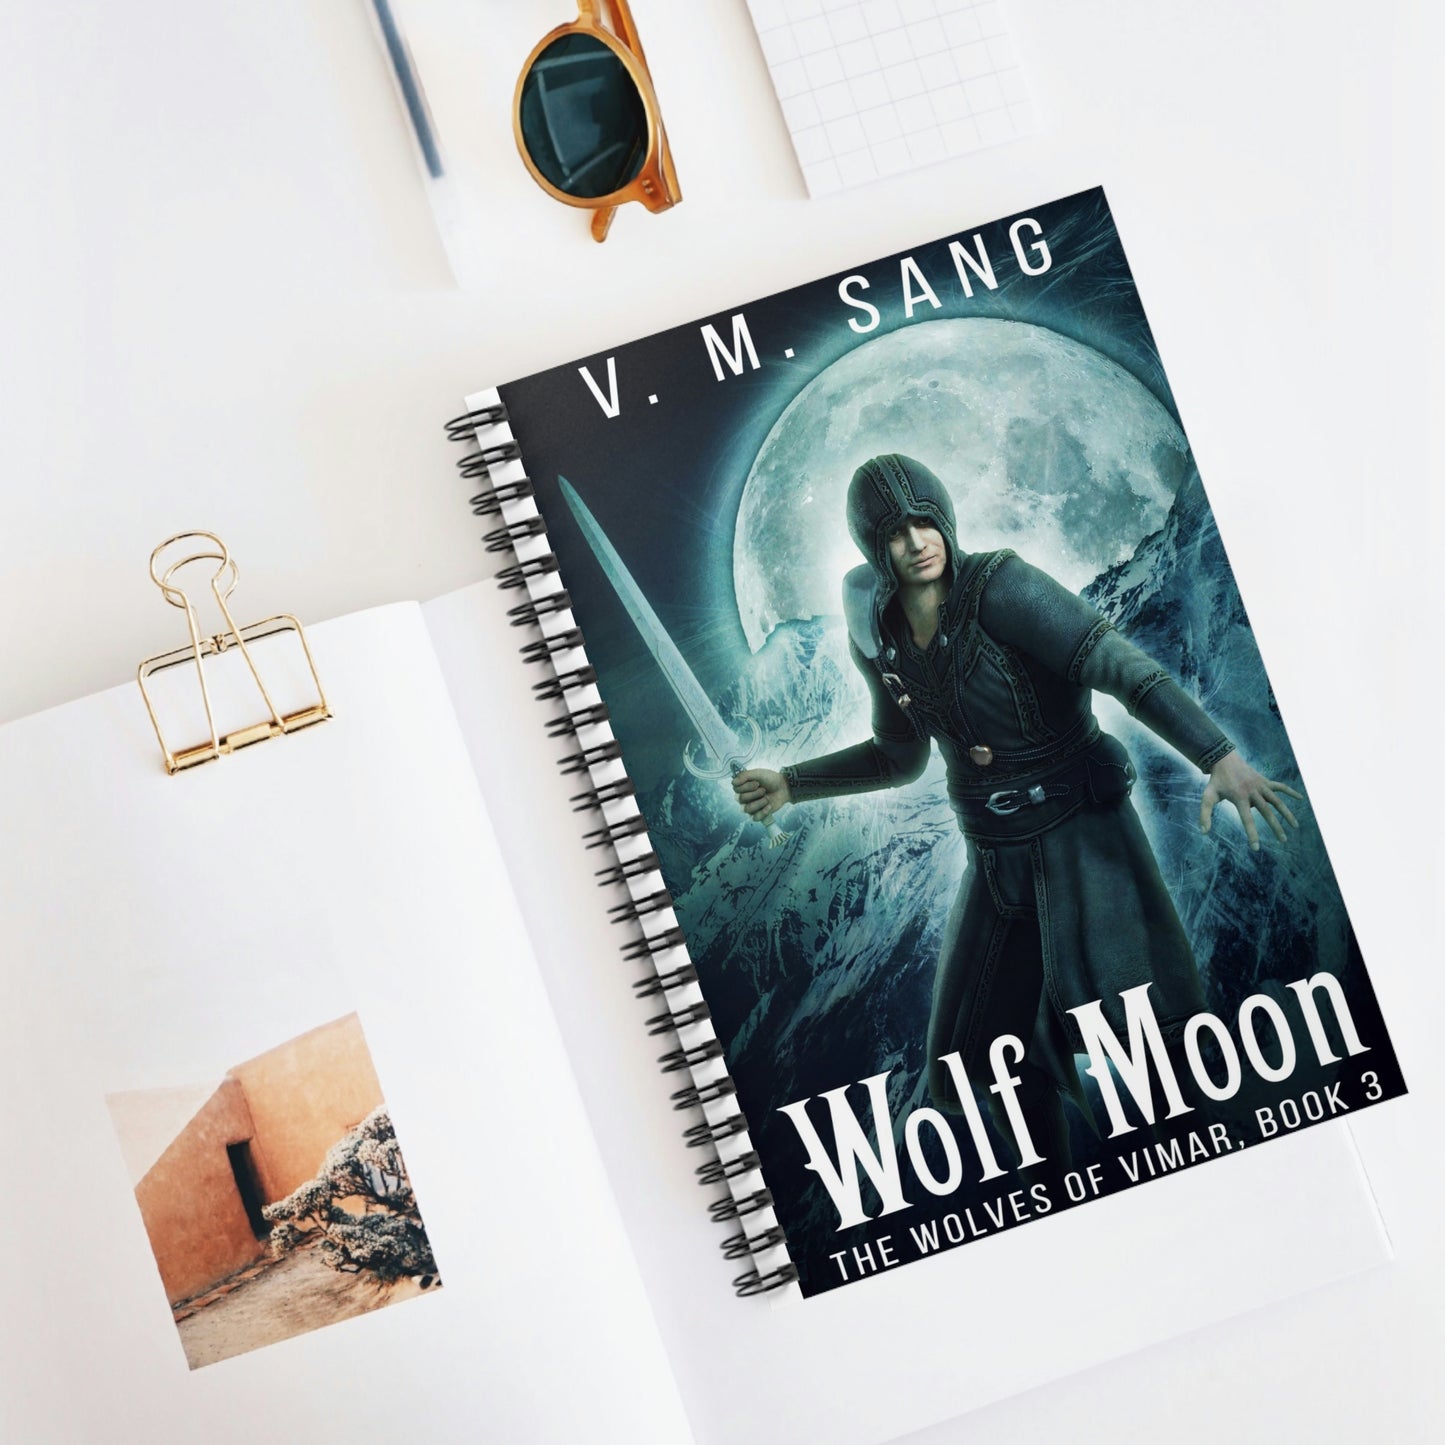 Wolf Moon - Spiral Notebook